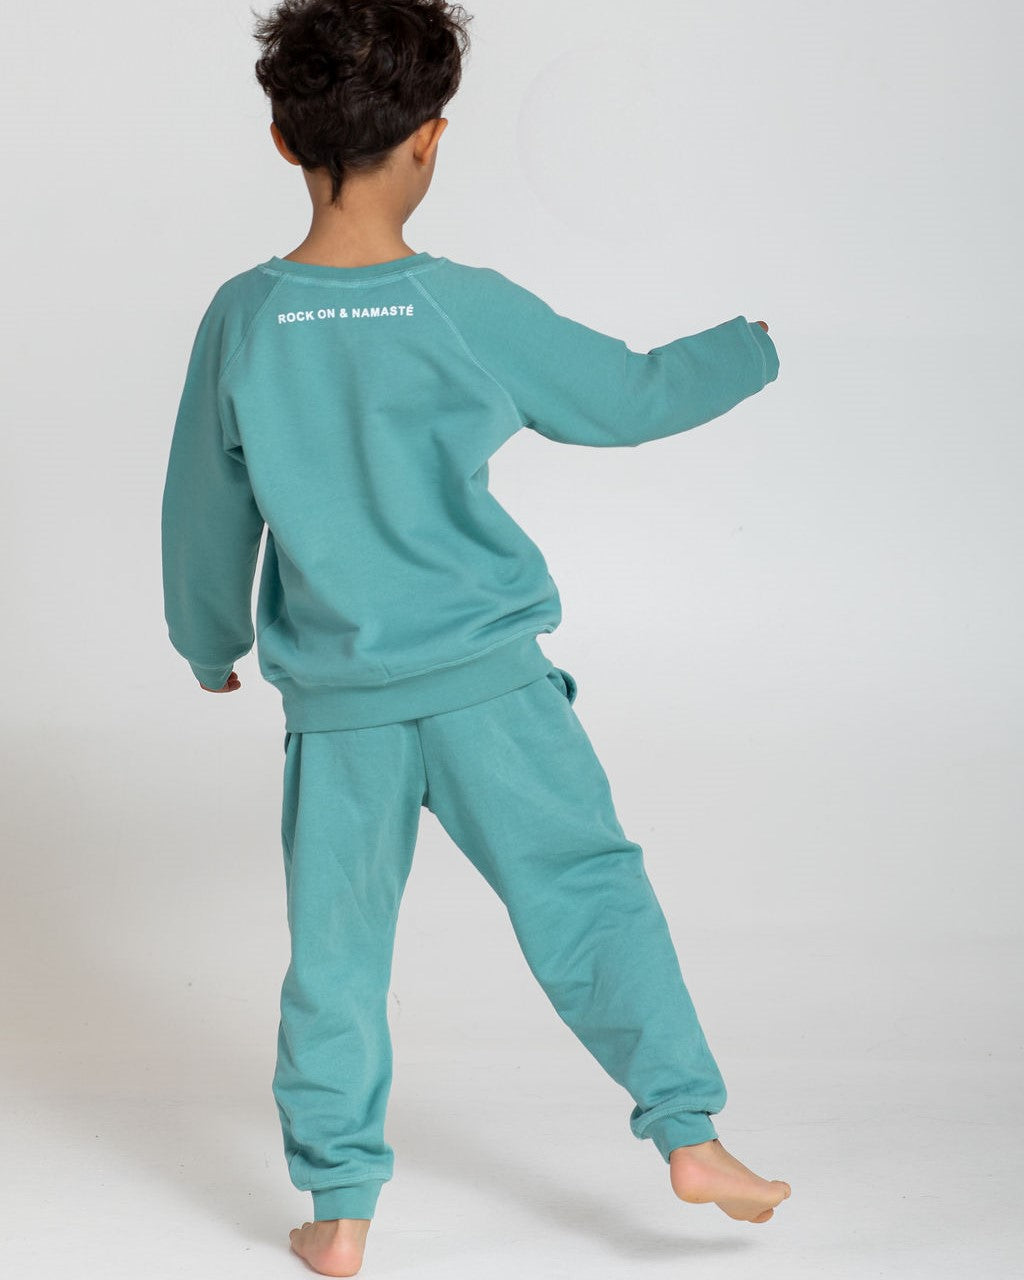 HOPE Sweatshirt Kids (turquoise)